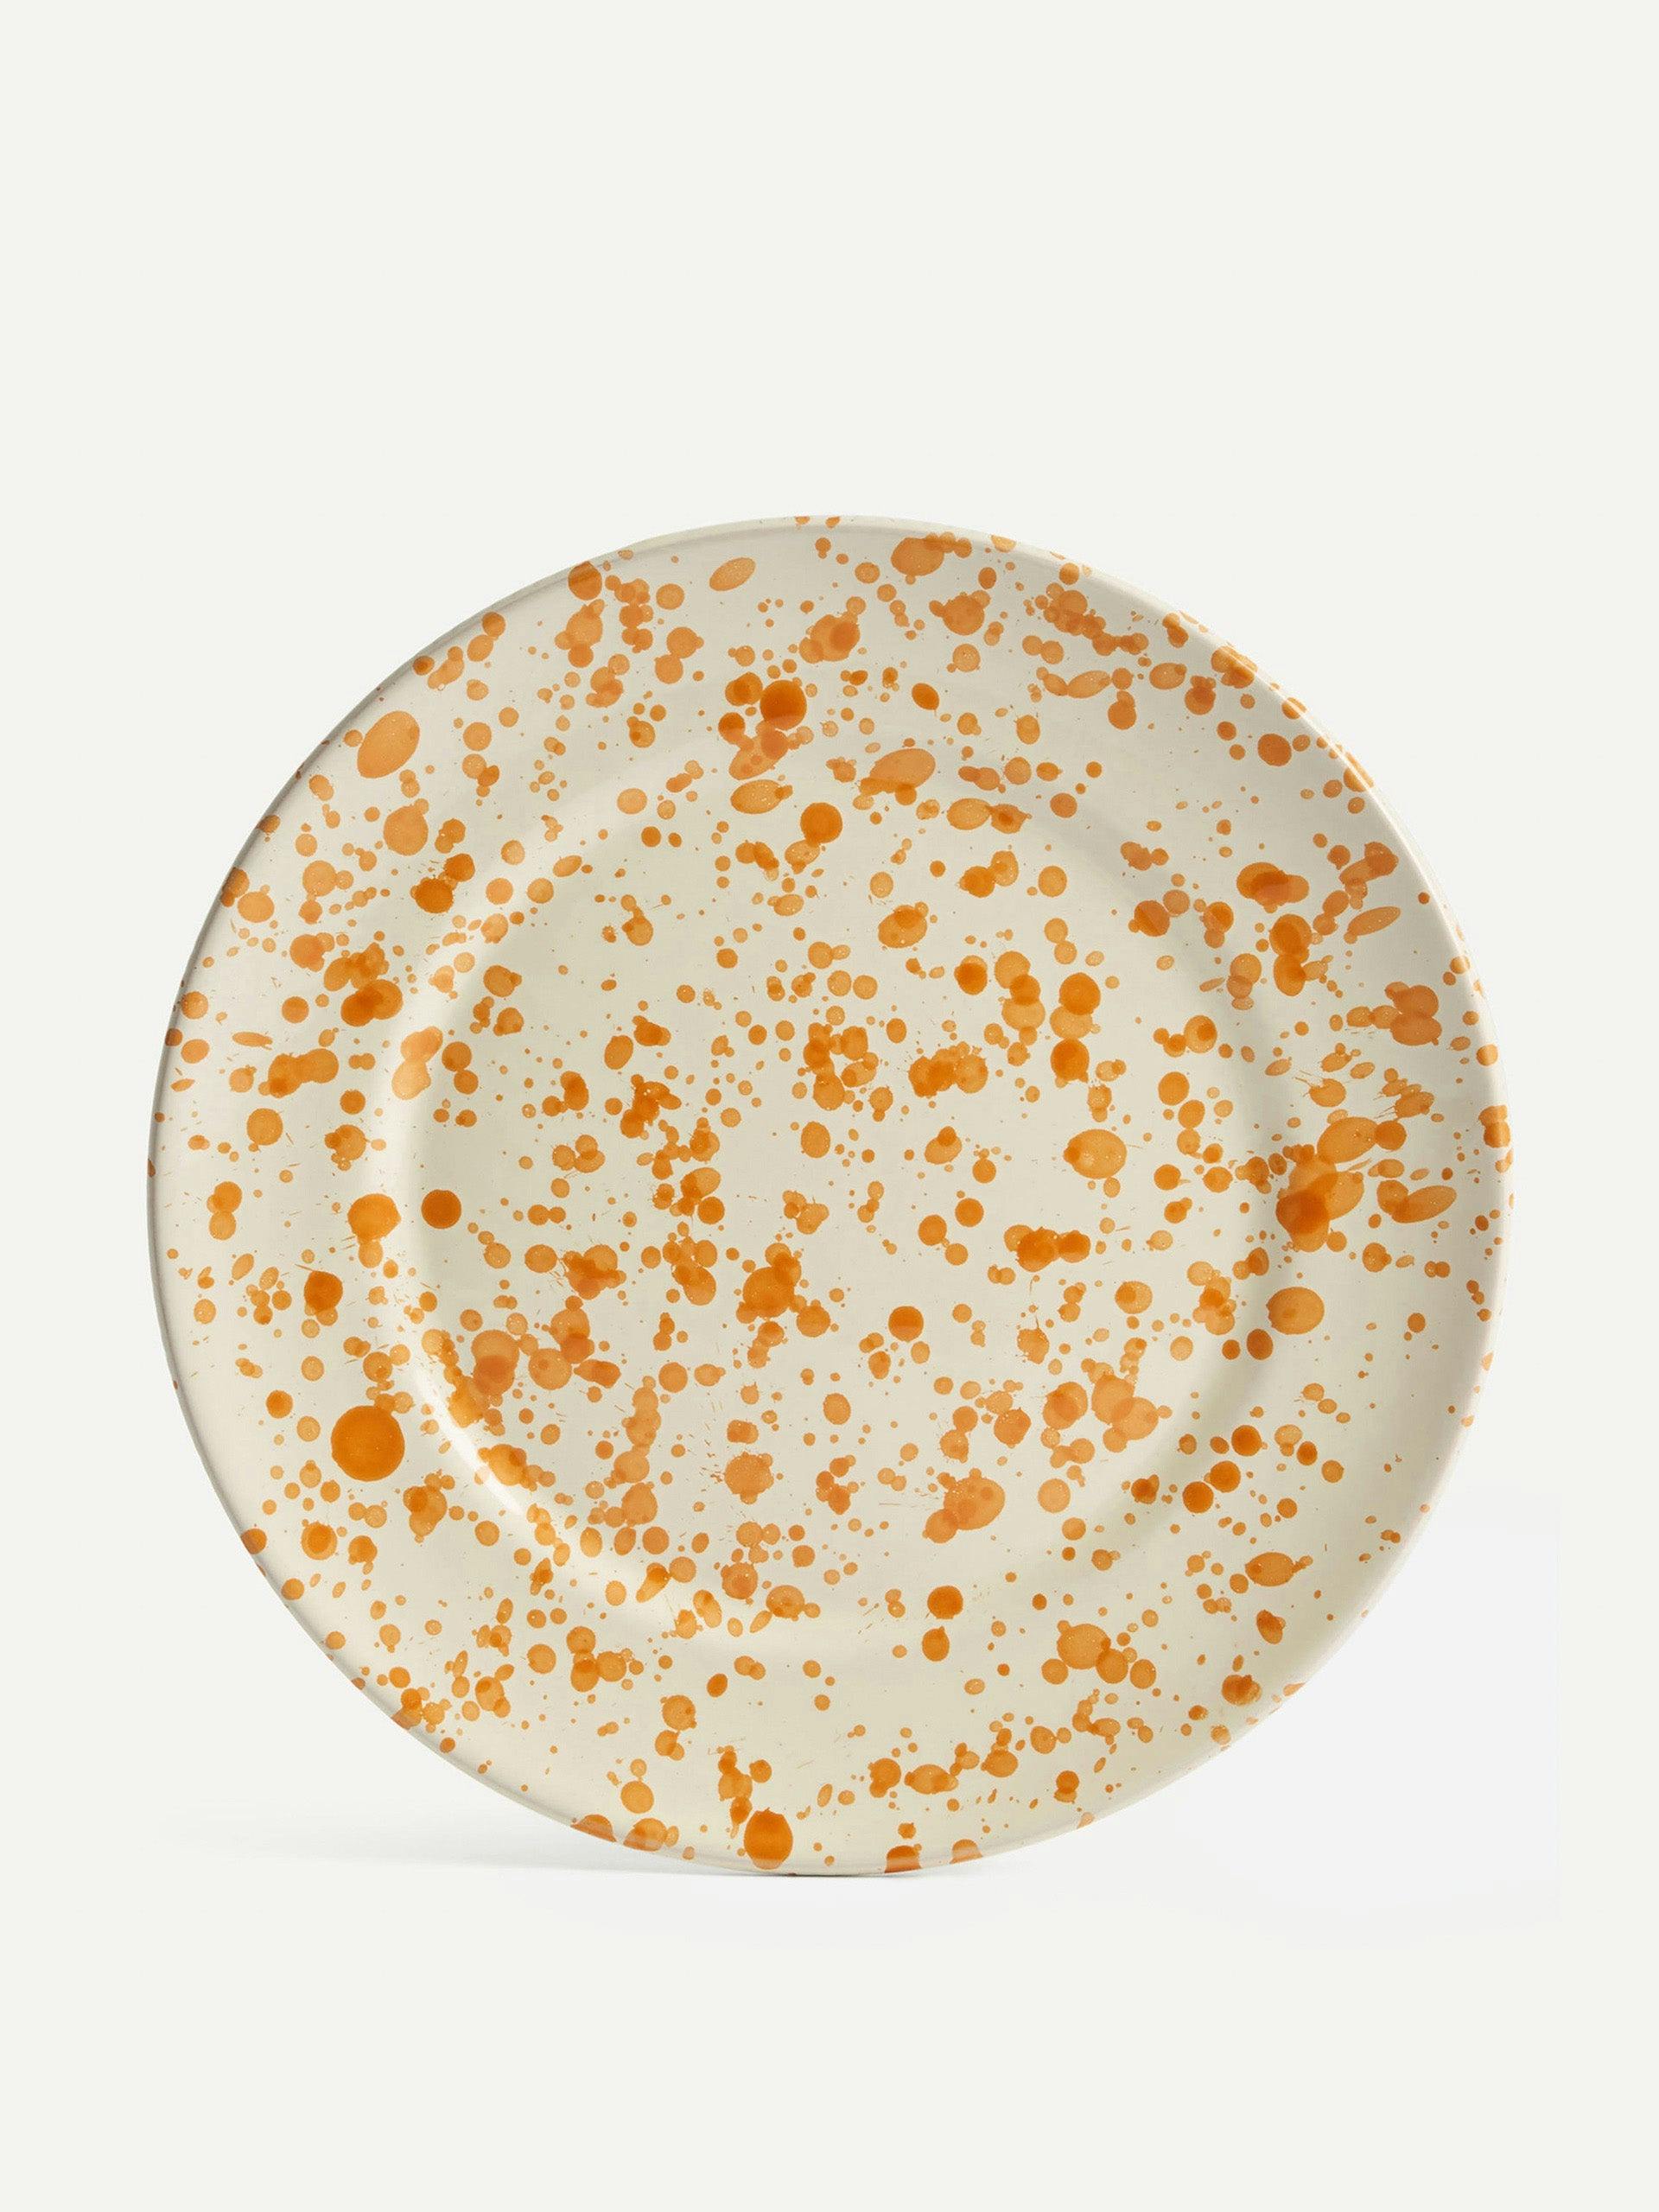 Dinner plate in burnt orange